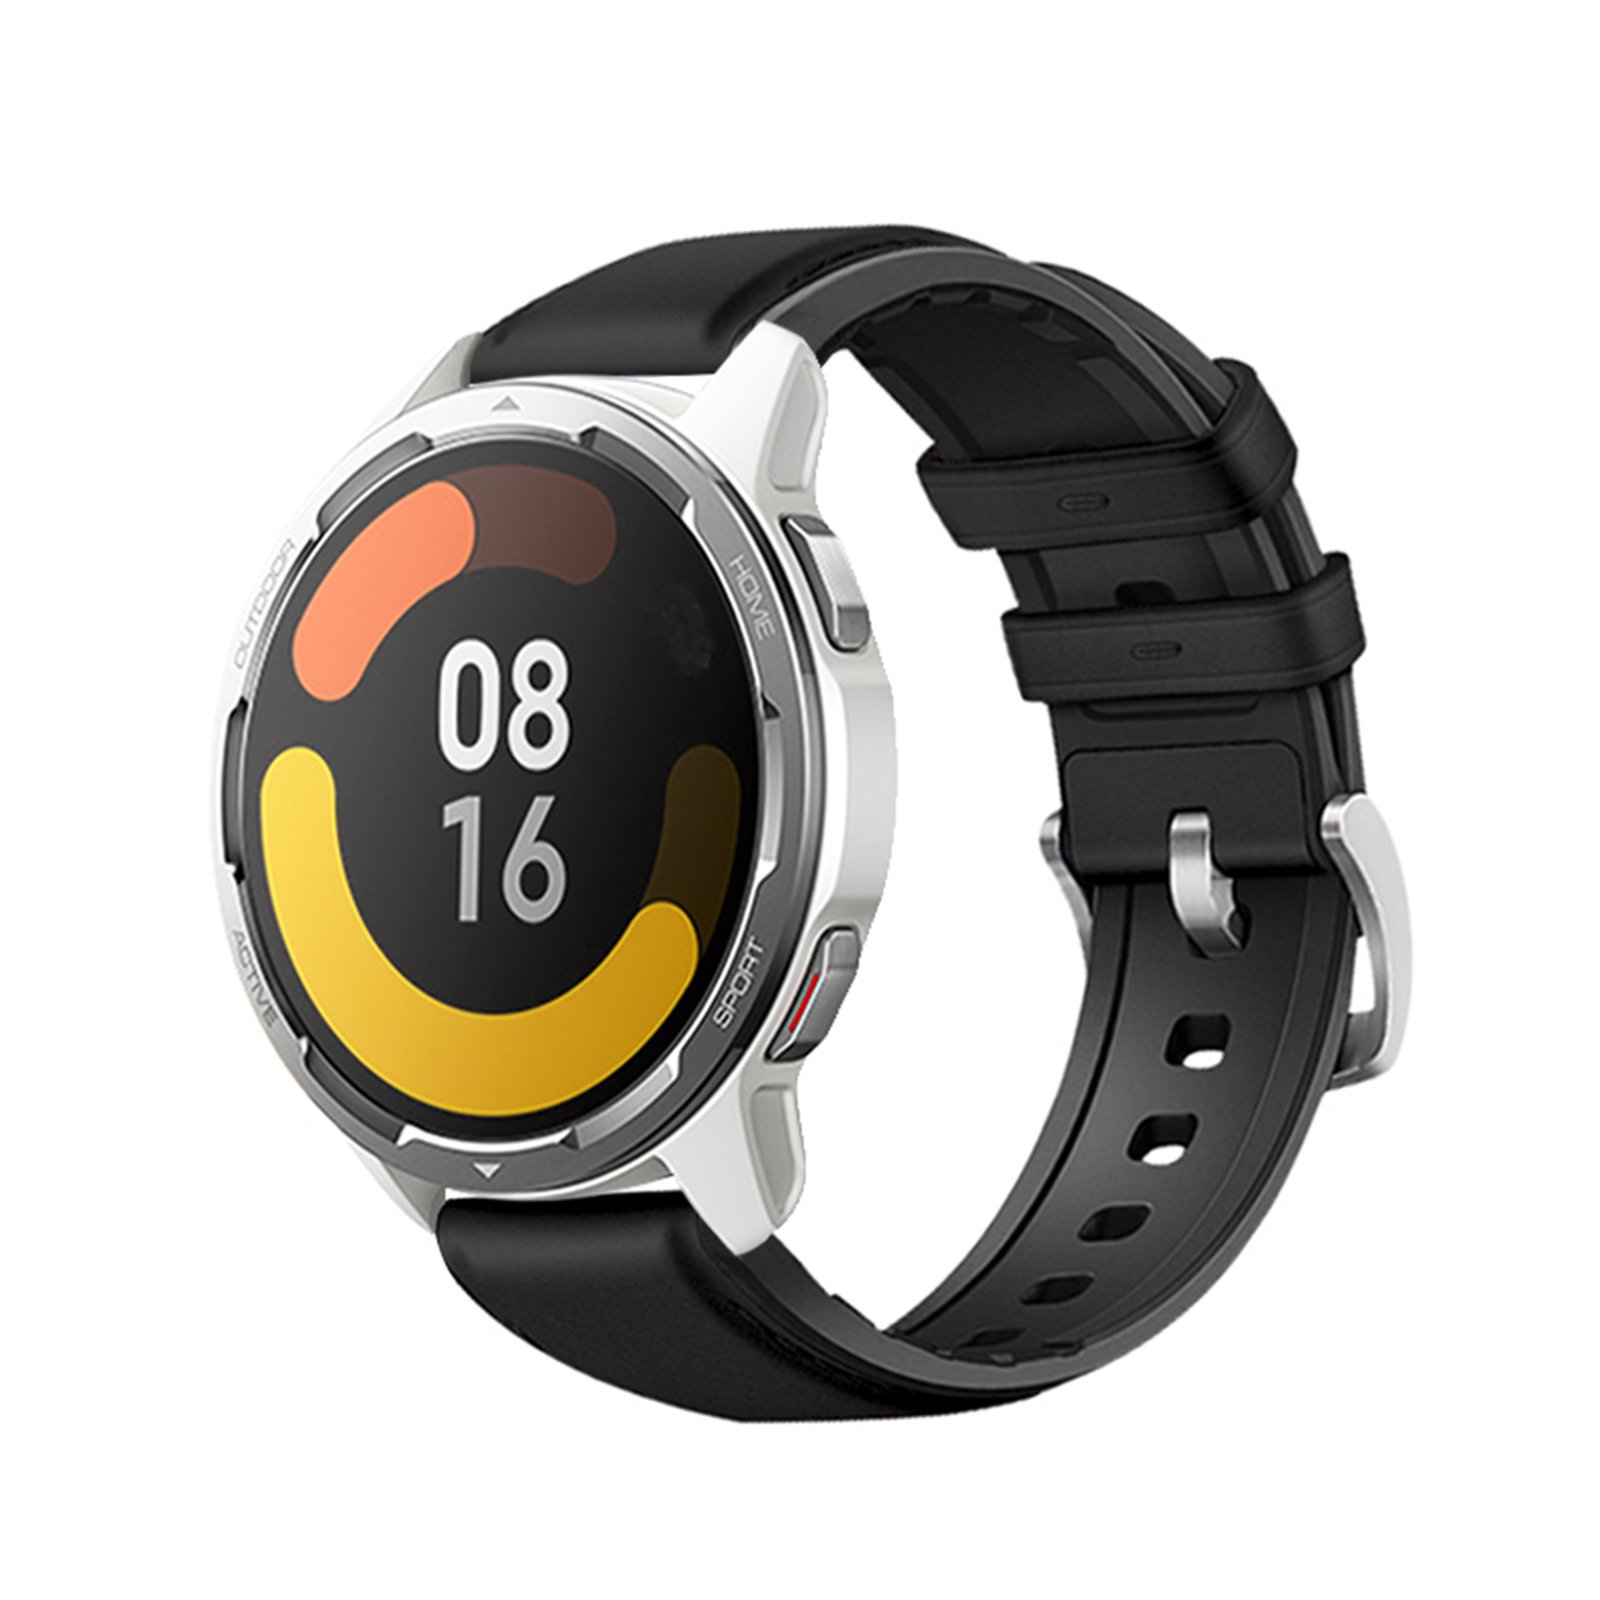 Correa silicona Xiaomi Watch S1 (gris) 